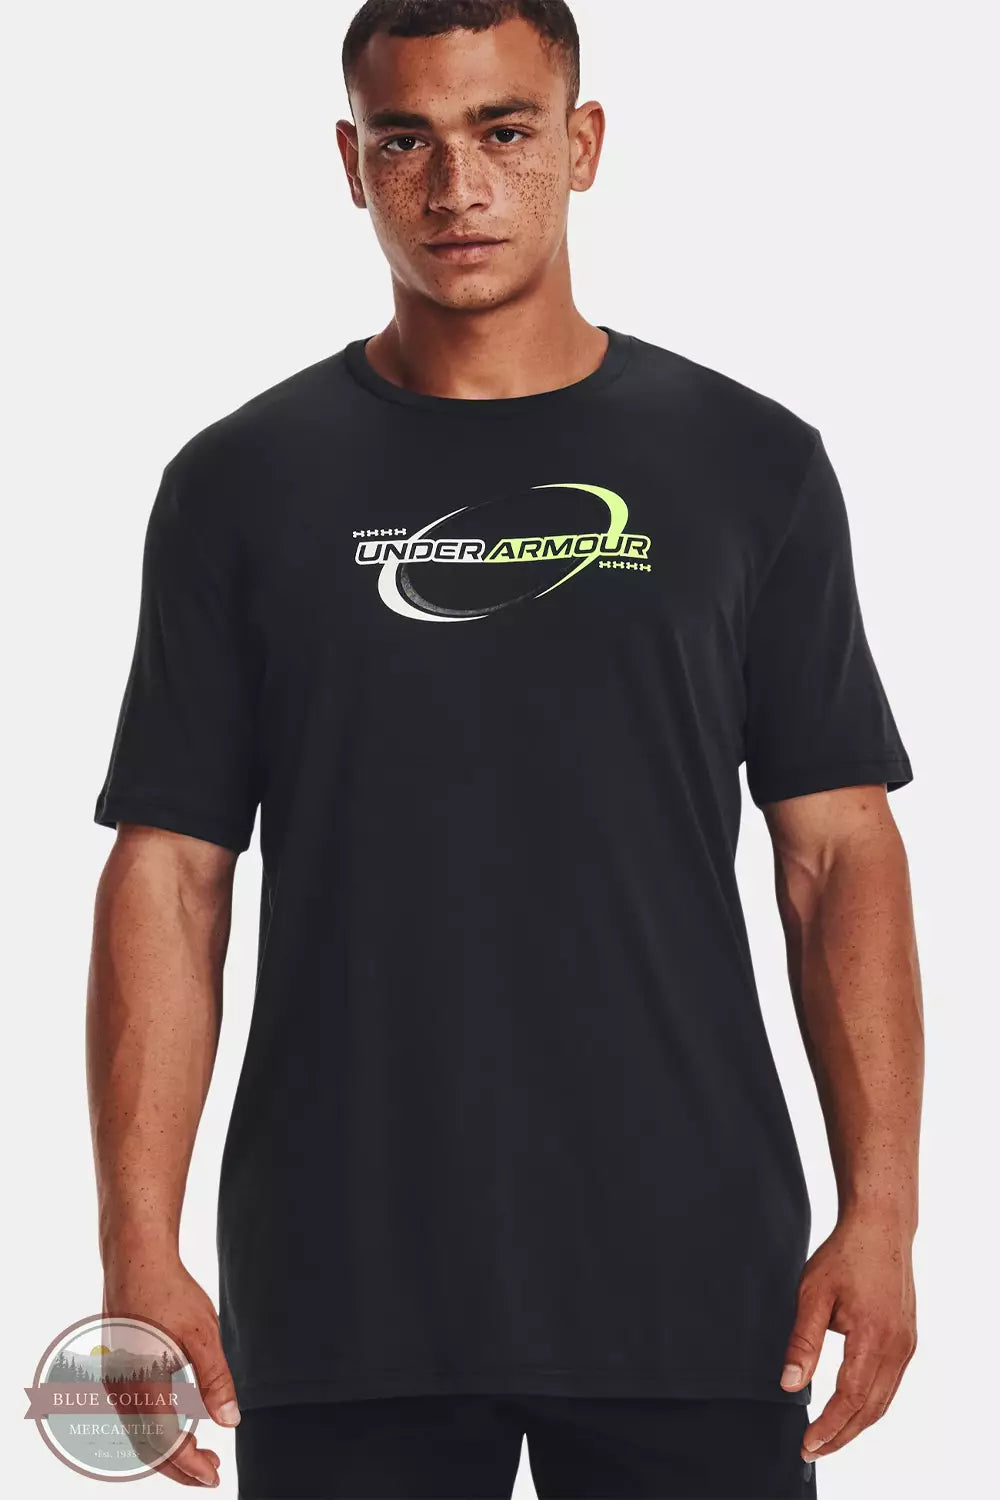 UNDER ARMOUR - T-shirt Sportstyle Homme Marine Green/Black